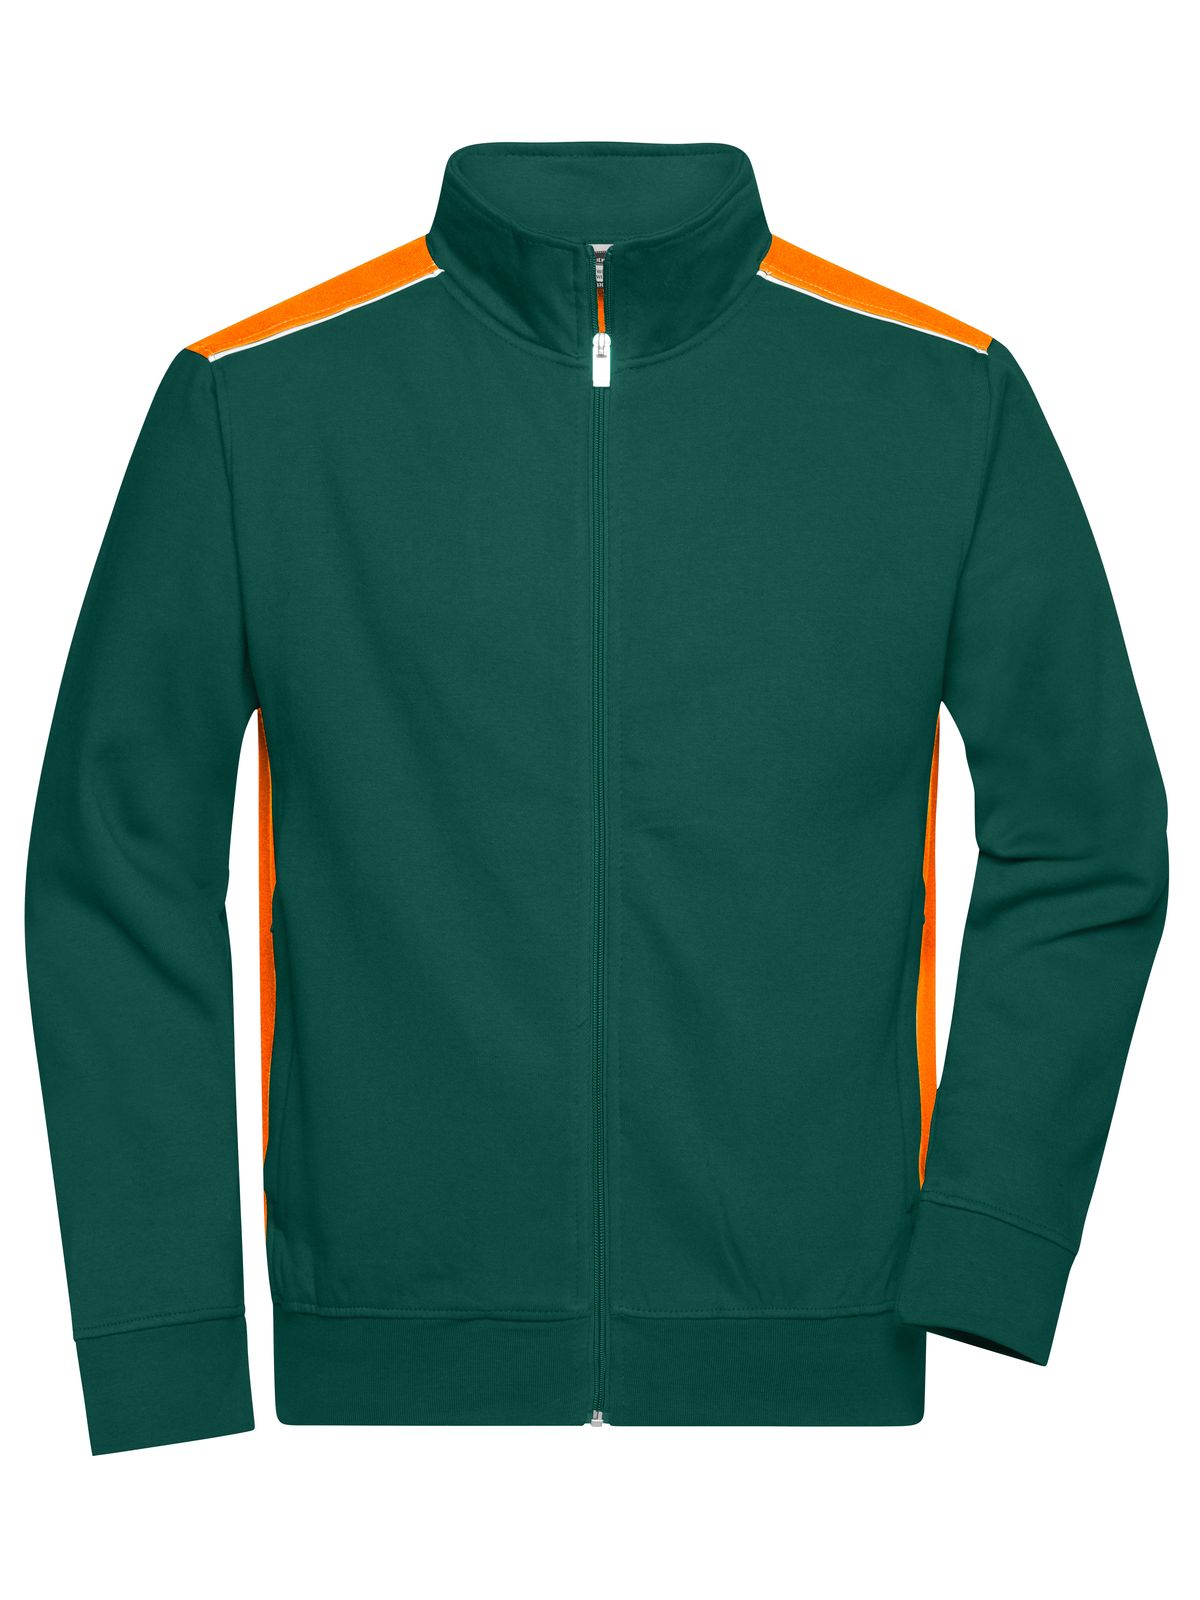 mens-workwear-sweat-jacket-color-dark-green-orange.webp